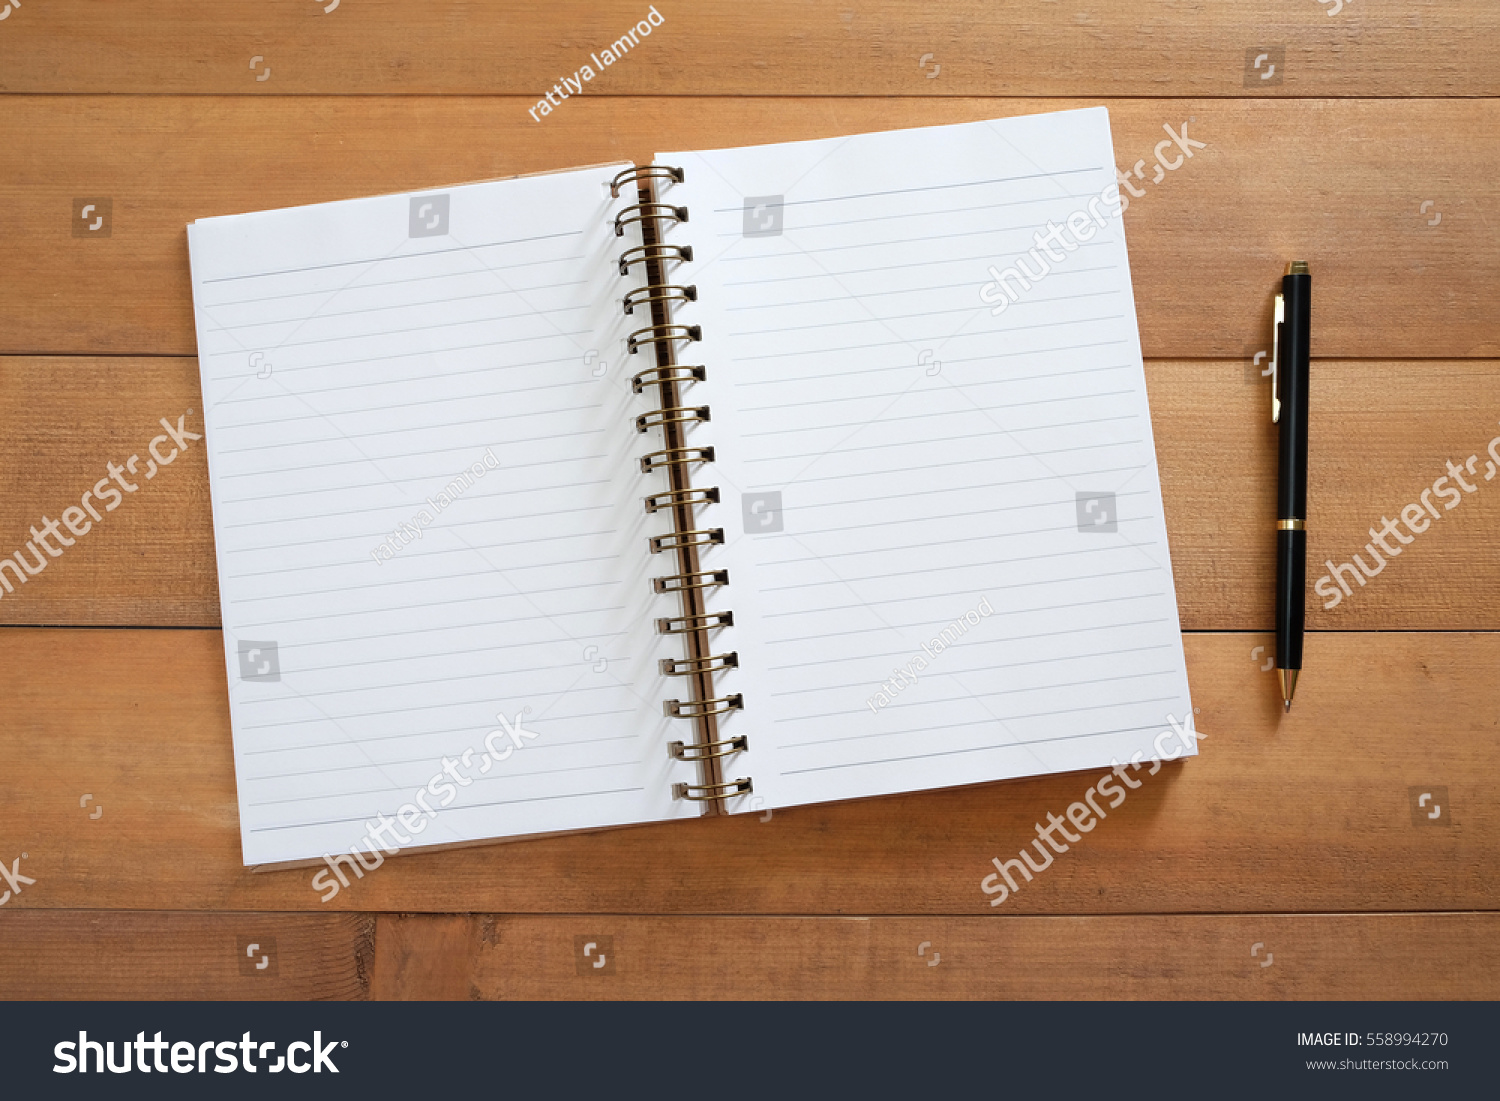 Blank open notebook with pen on wooden desk #558994270